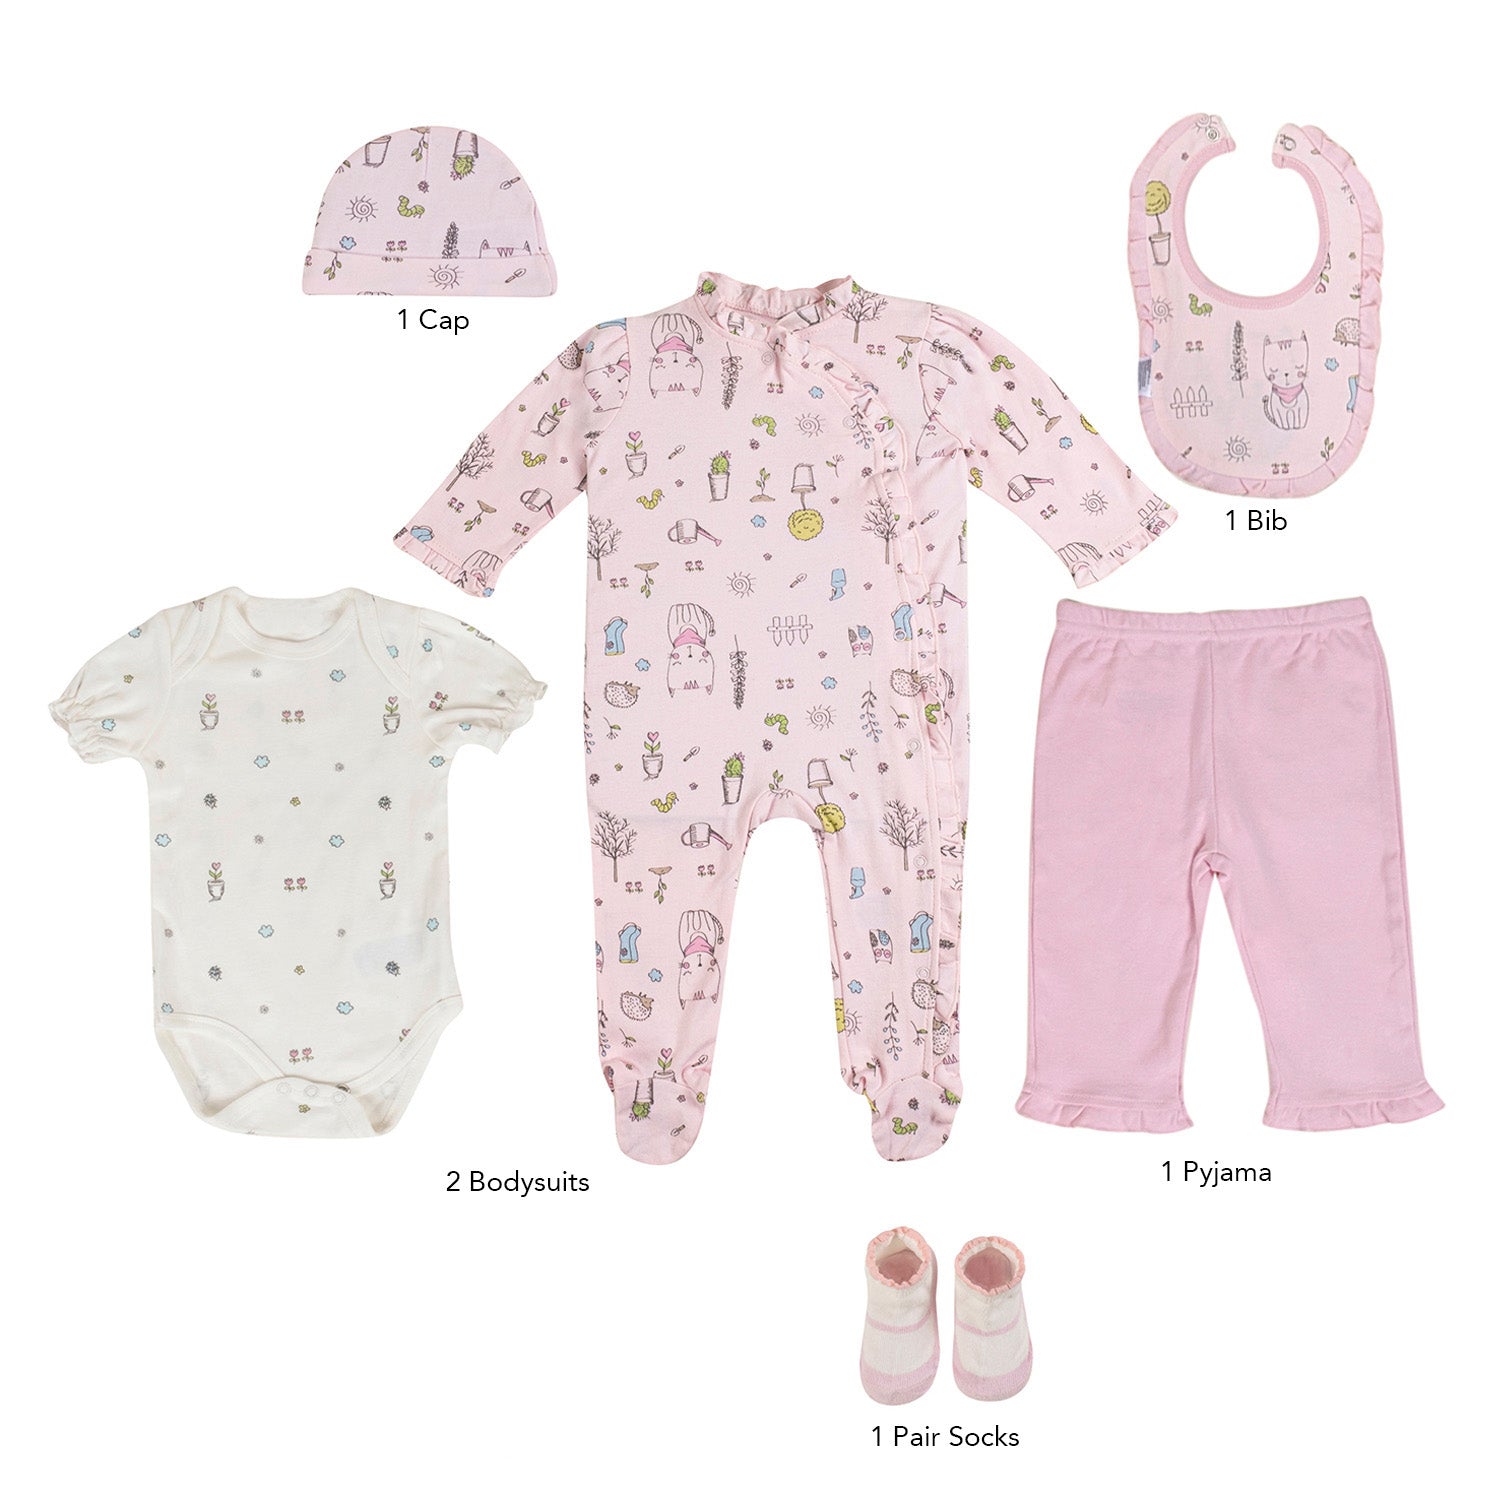 Baby Moo Floral Kitty Gift Set 6 Piece With Bodysuits, Pyjama, Cap, Bib And Socks - Pink